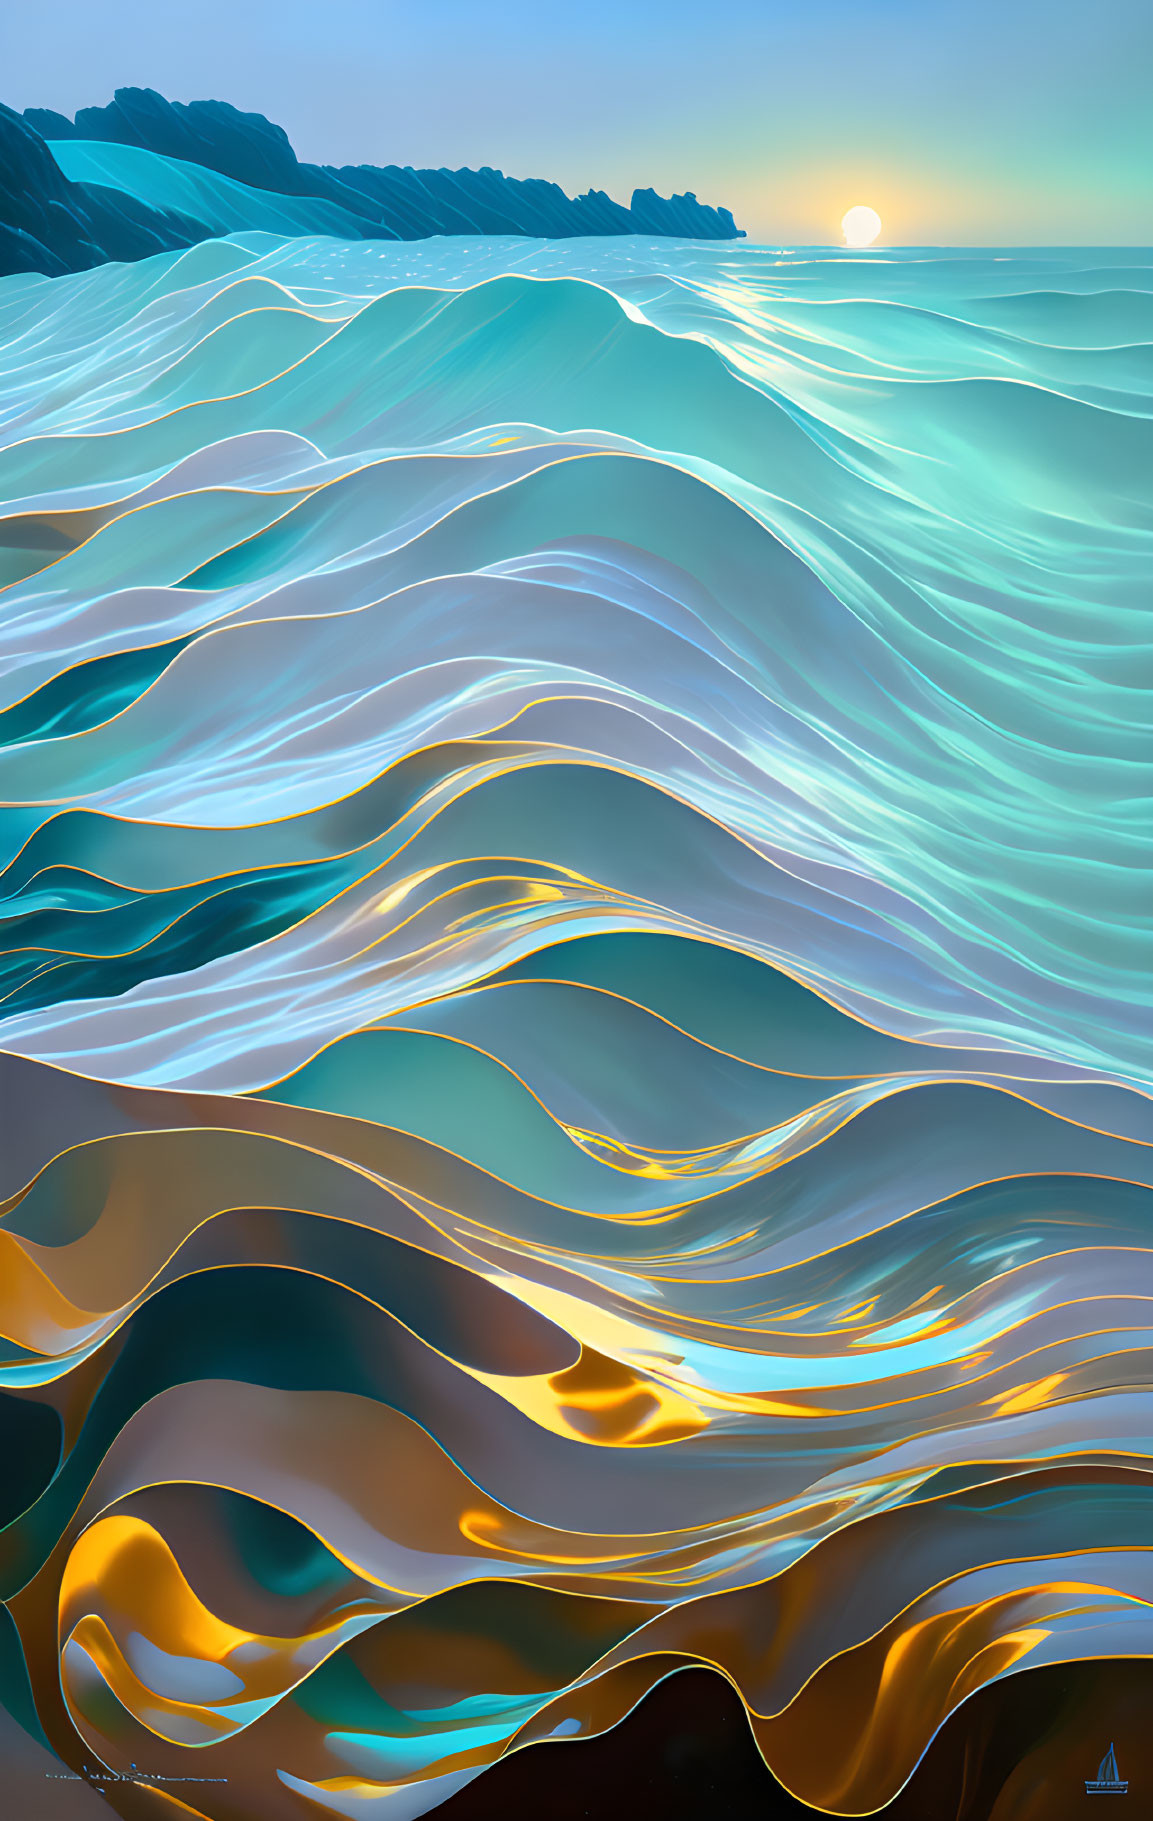 Ocean Waves Digital Artwork: Blue & Gold Sunset Theme